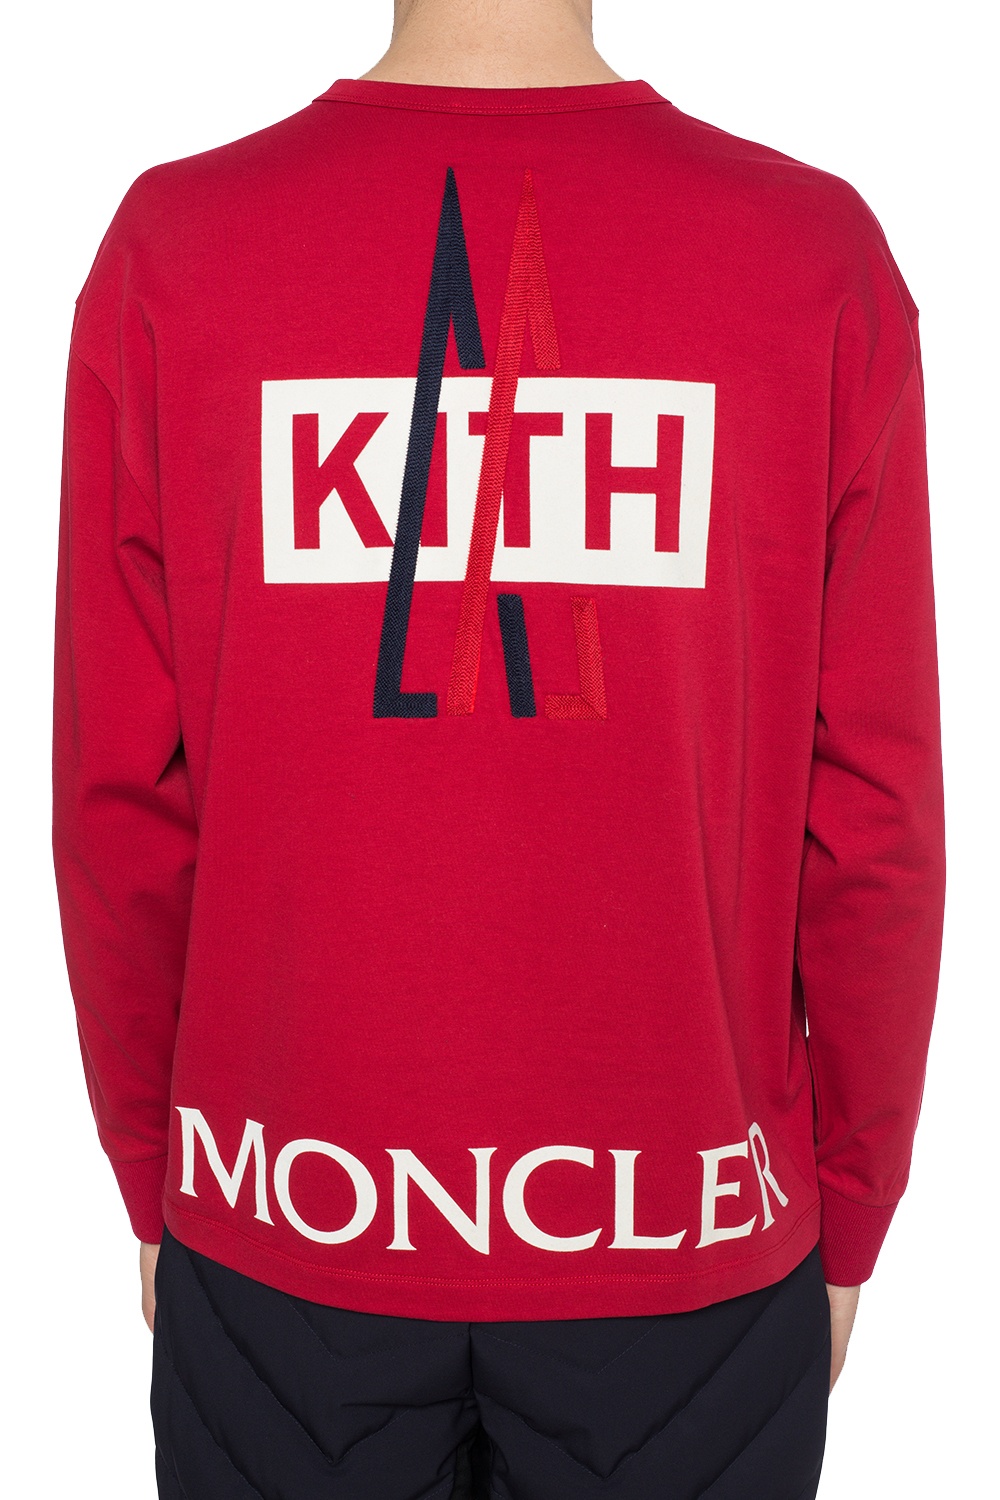 moncler x kith long sleeve